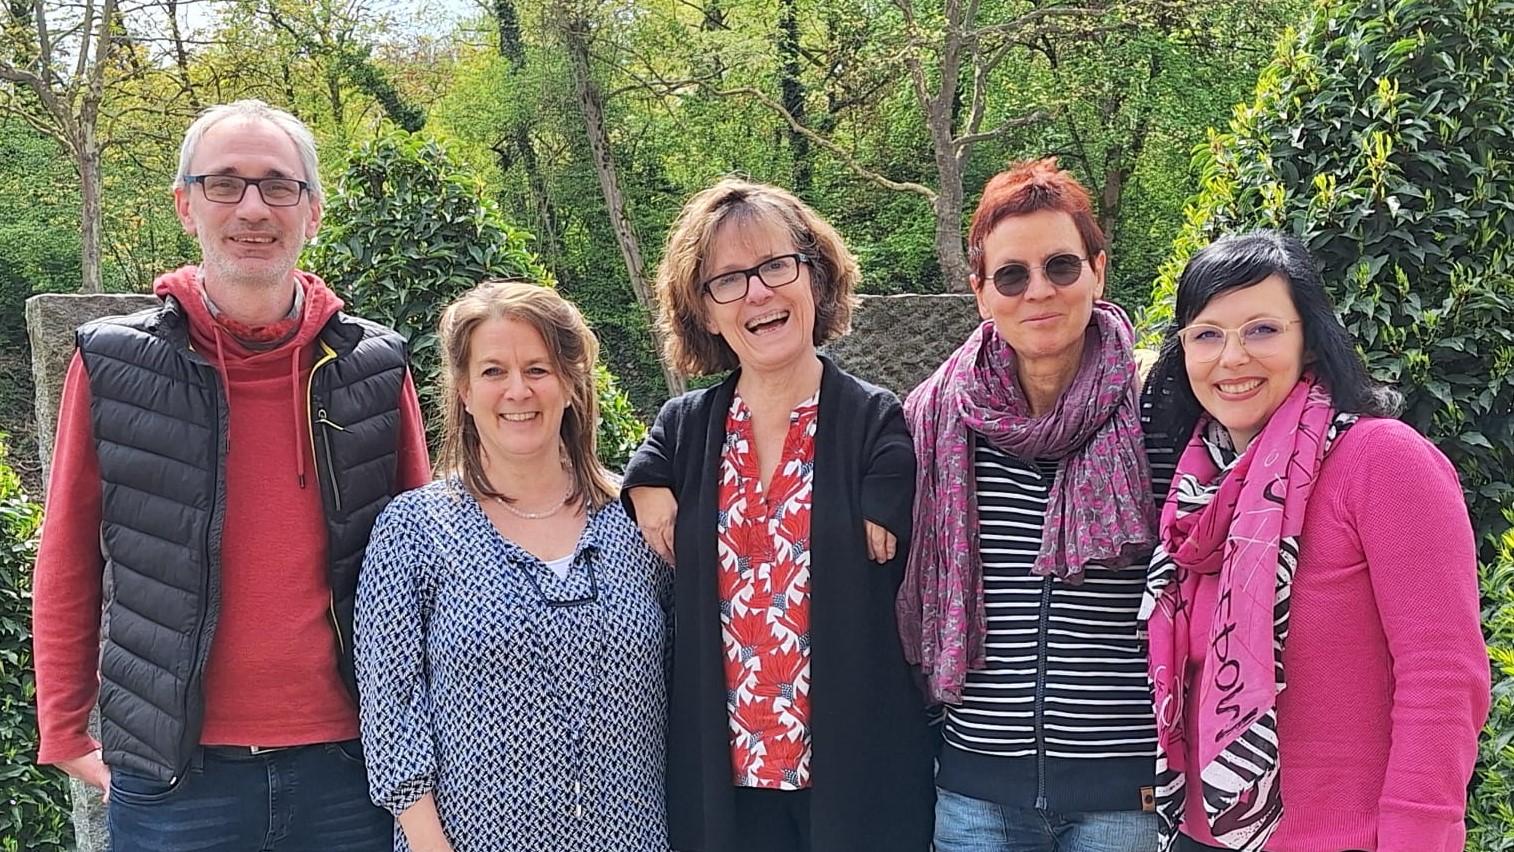 Das Team der Lebensberatung Lebach: Alexander Penth, Simone Böcher, Martina Grosch, Stefanie Kilian und Jacqueline Siegwart.